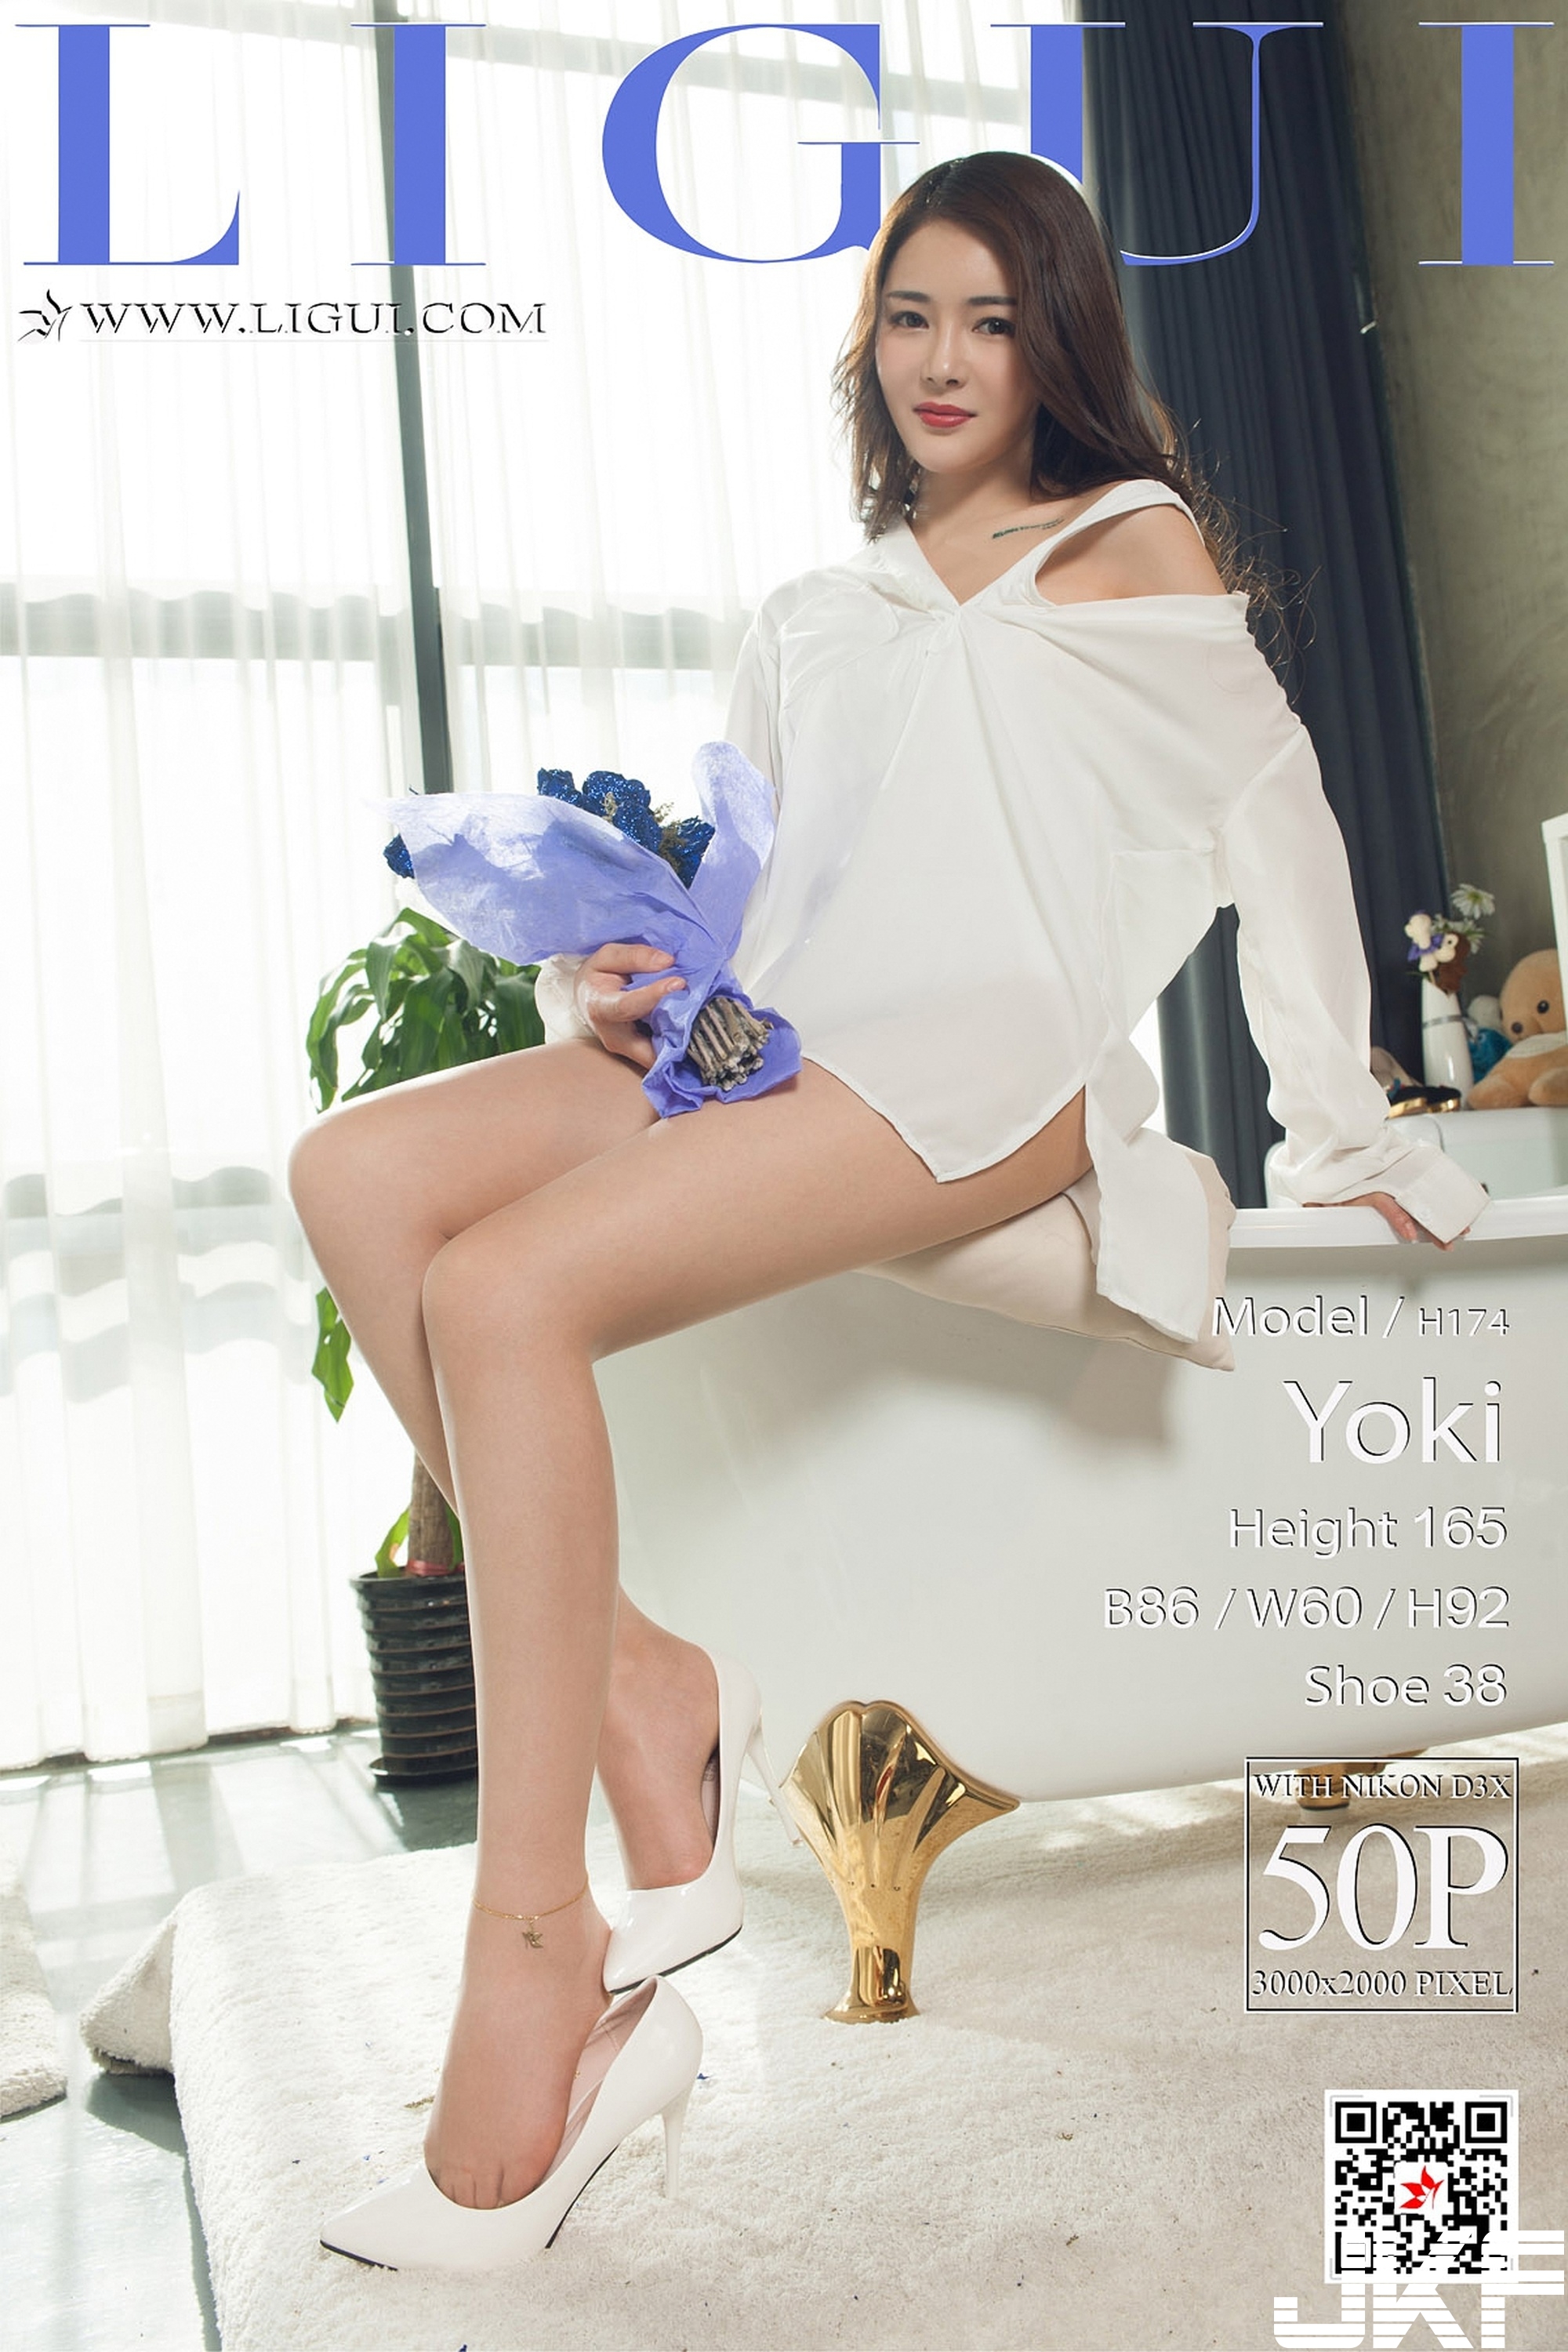 [Ligui麗櫃] 2018.03.04 網絡麗人 Model Yoki [52P] - 貼圖 - 絲襪美腿 -